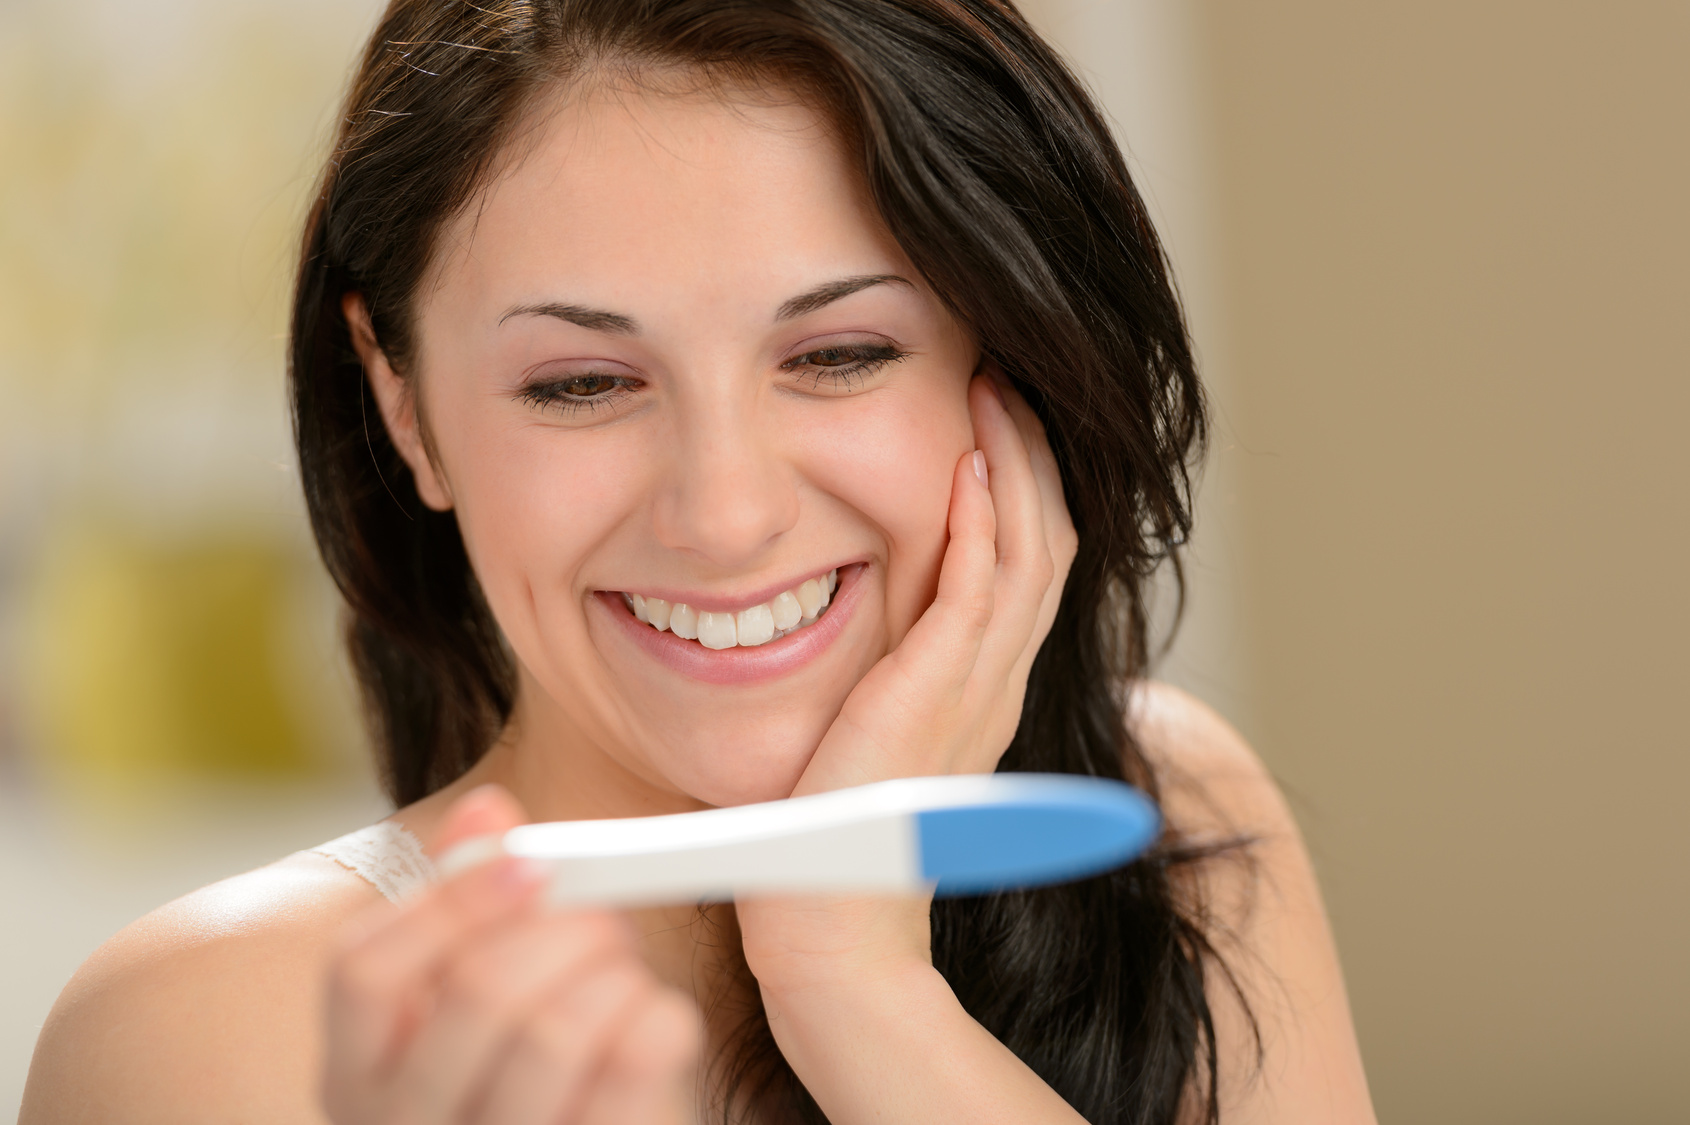 Salud dental y fertilidad femenina